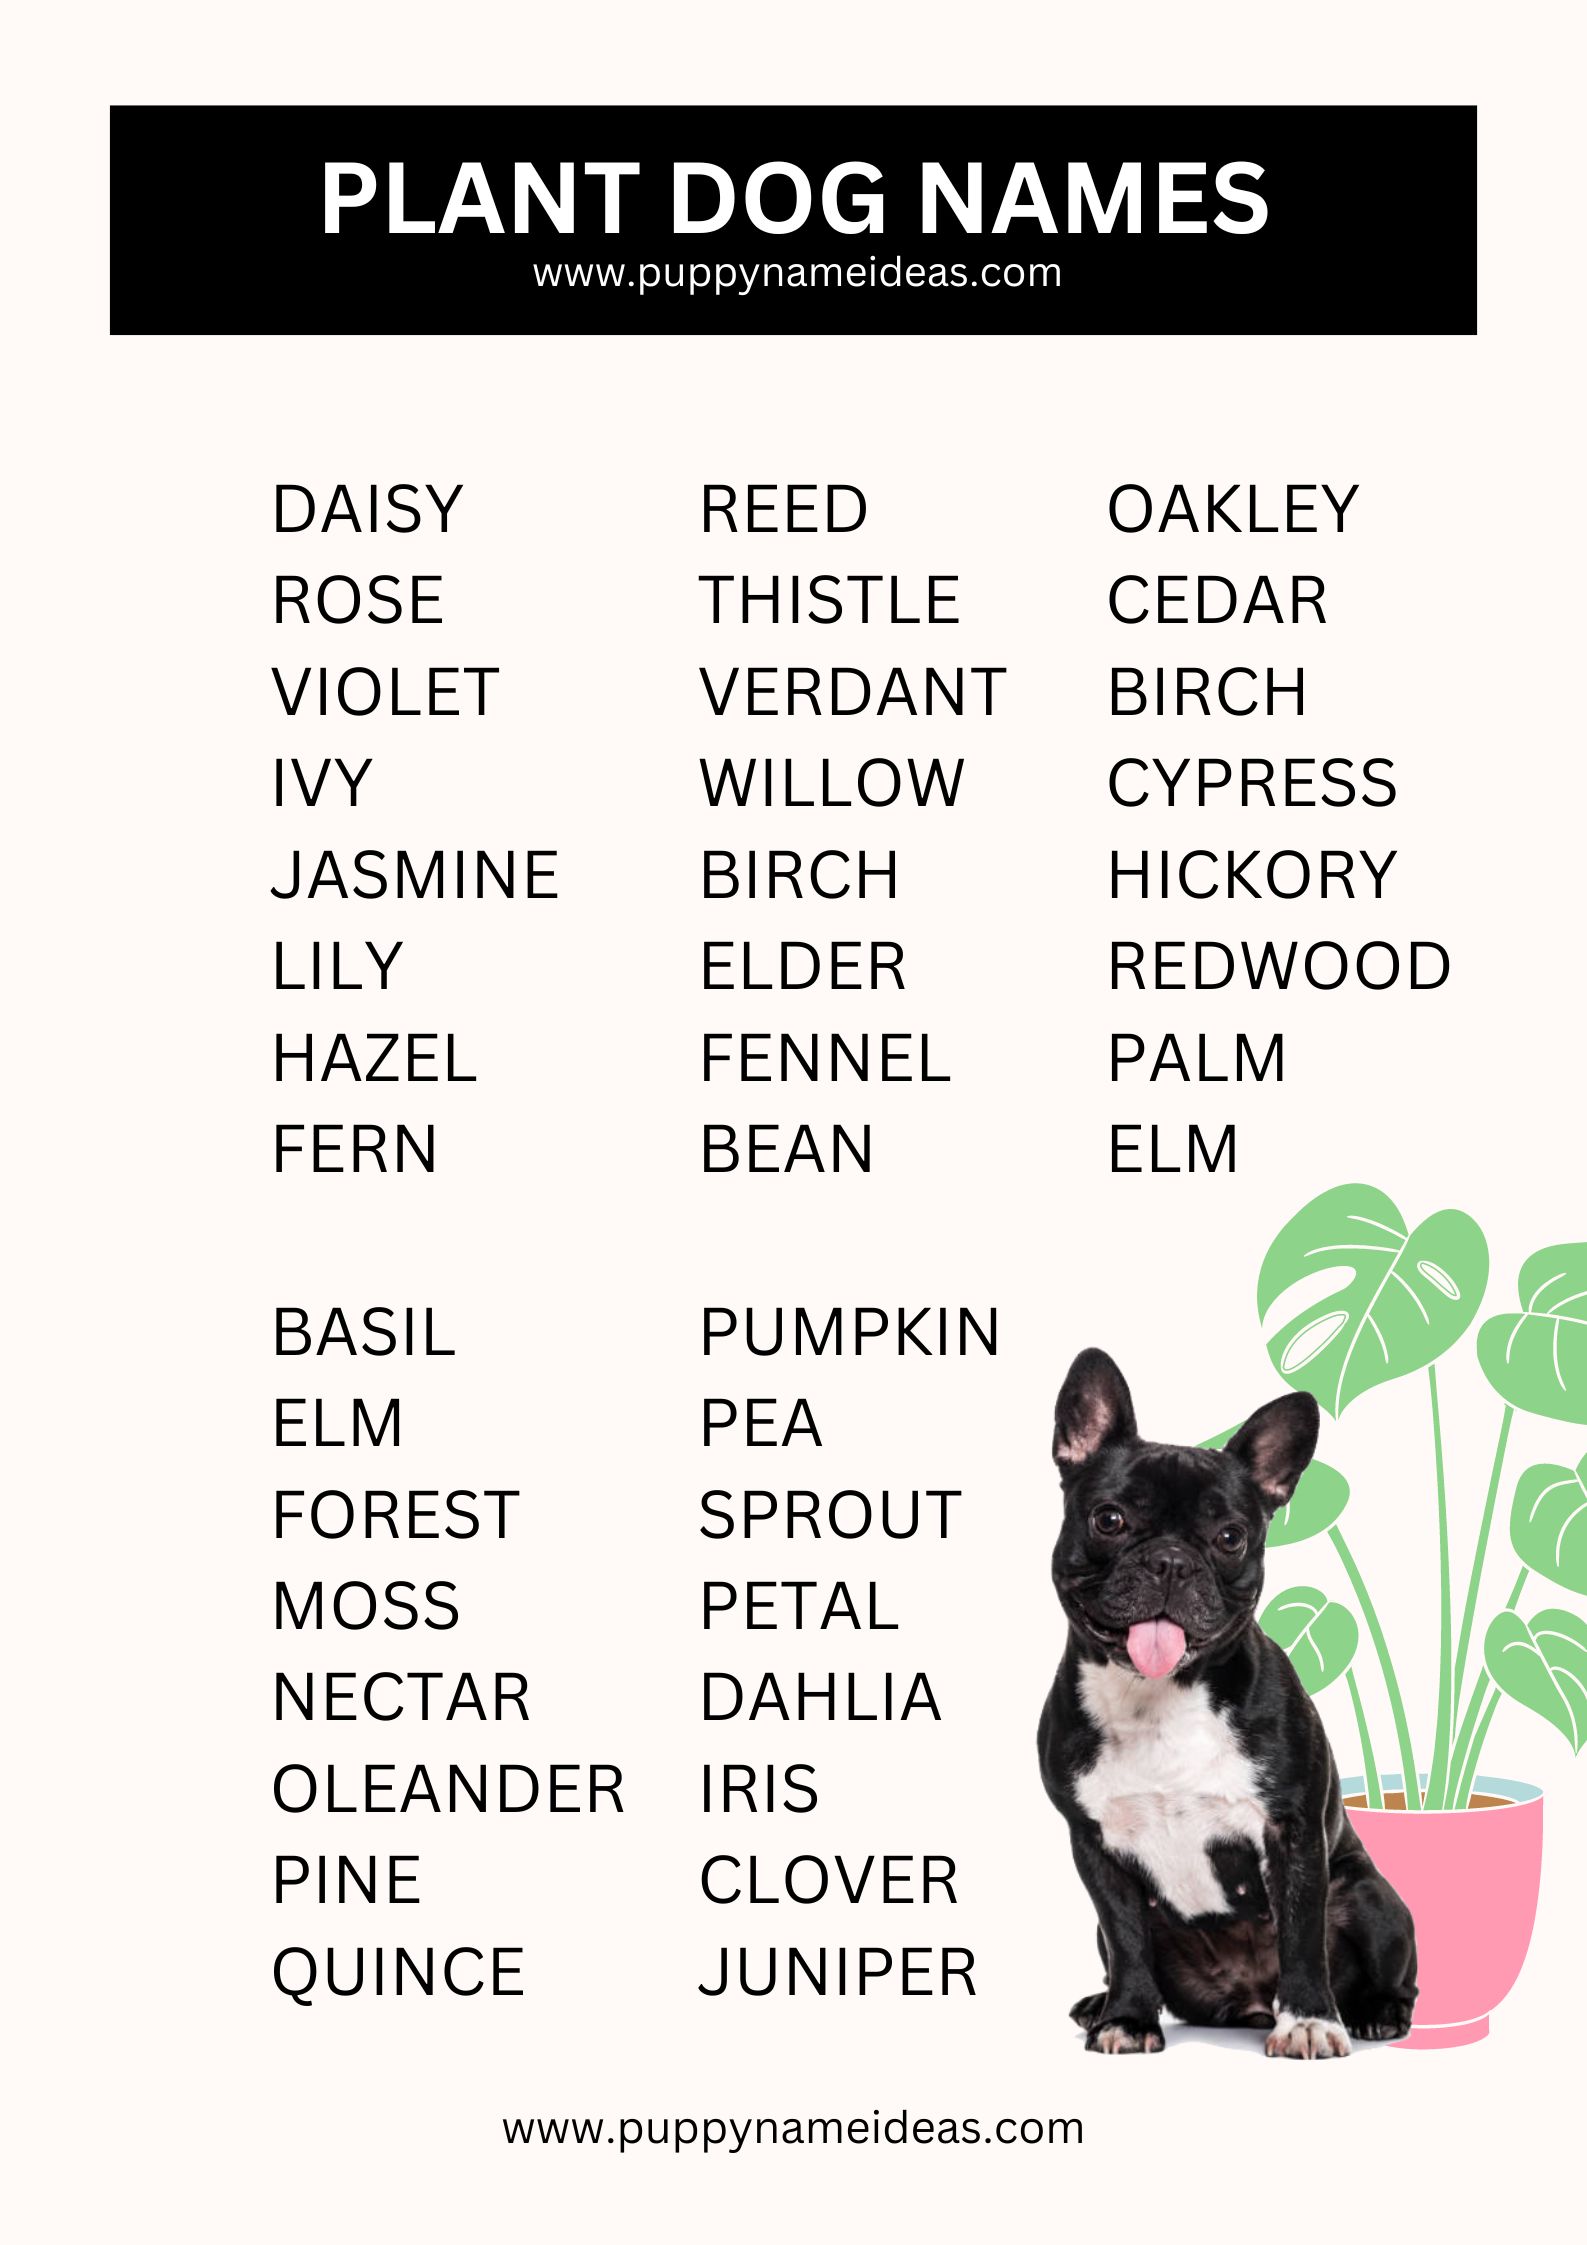 list of plant dog names